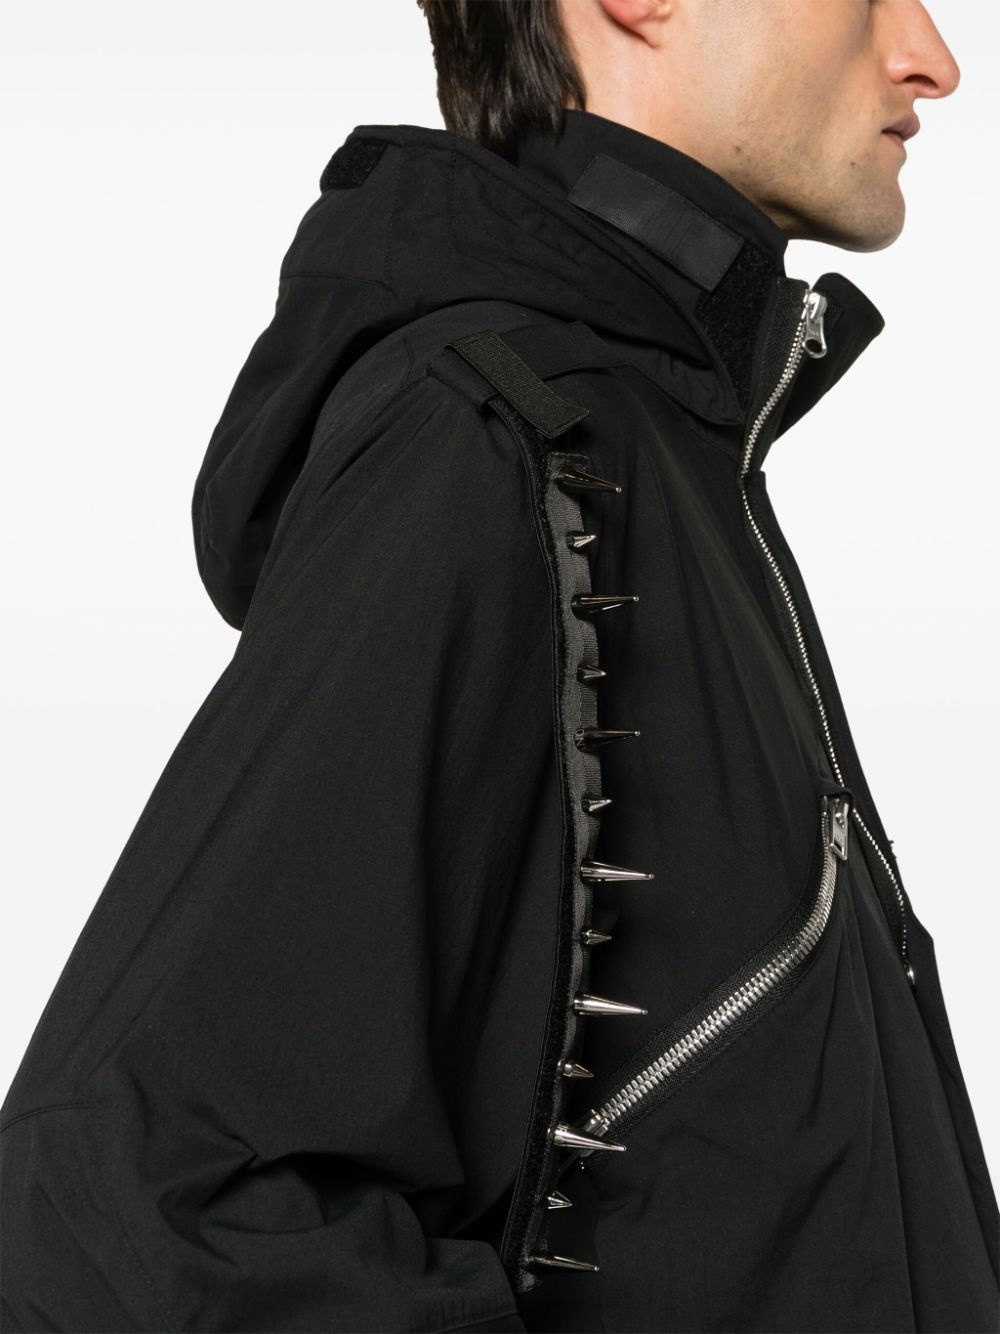 Encapsulated Interops hooded jacket - 5